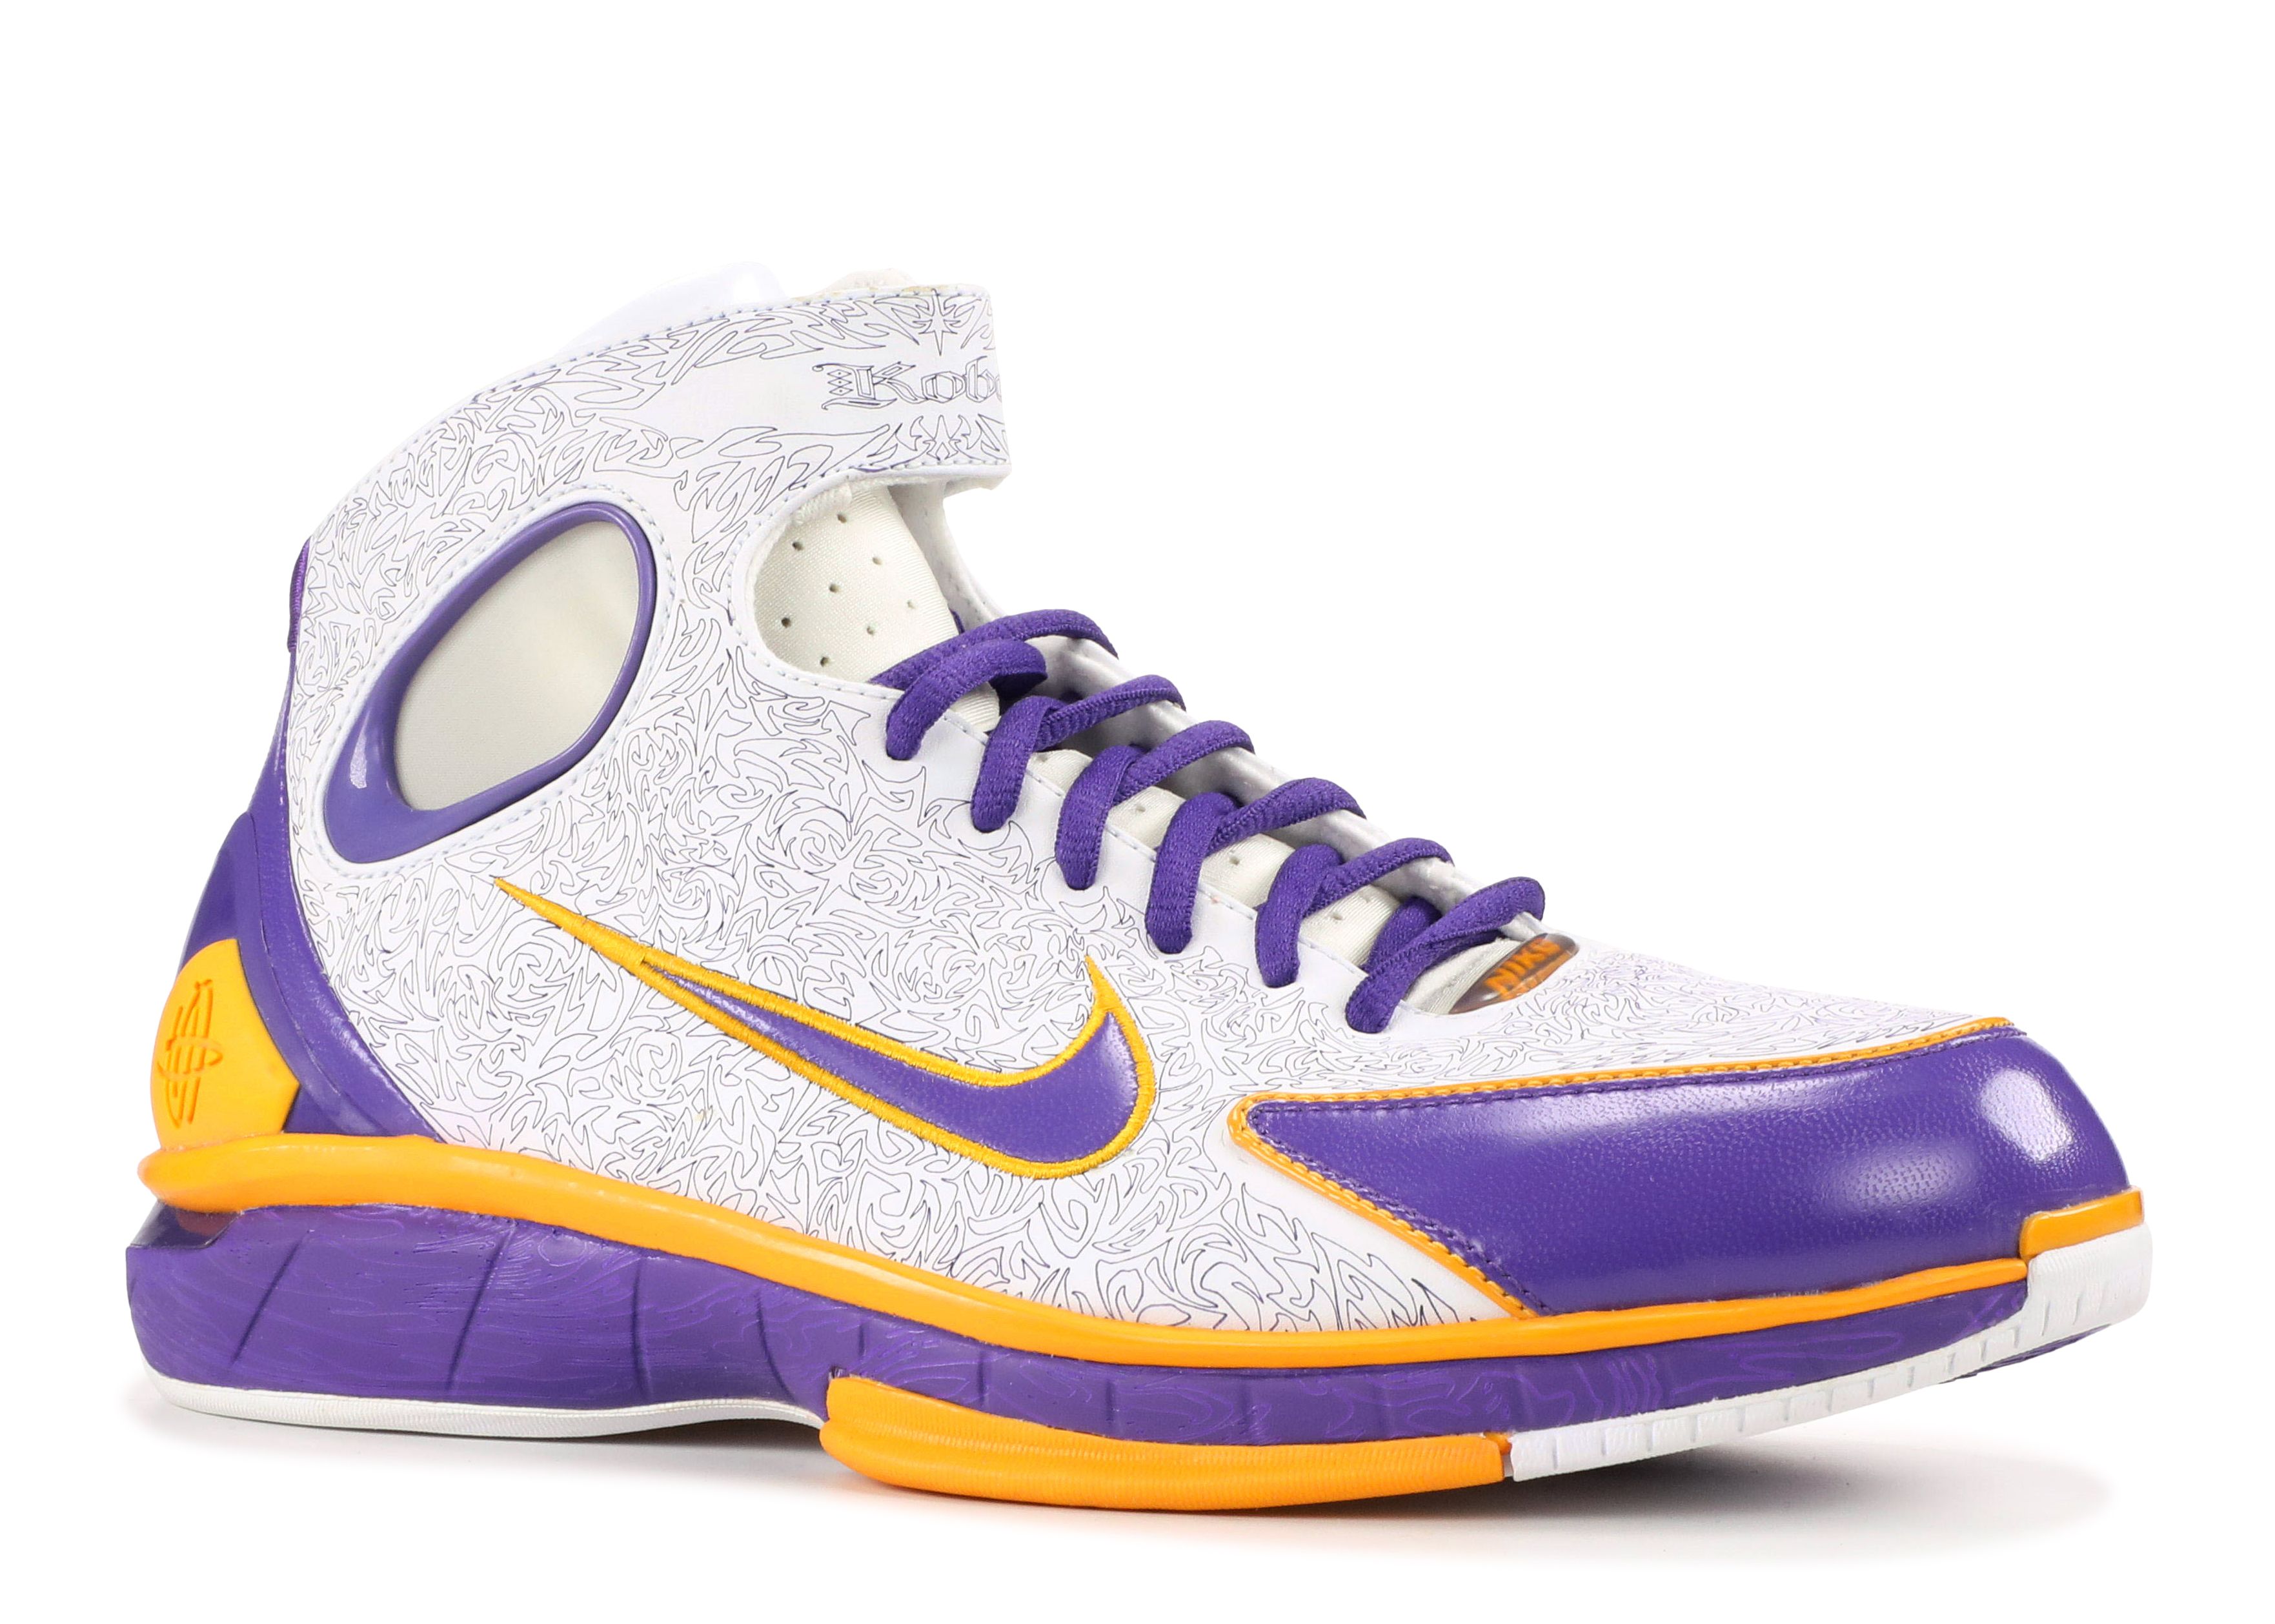 Huarache 2K4 'Kobe Laser' - Nike - 309957 153 - white/purple/yellow |  Flight Club